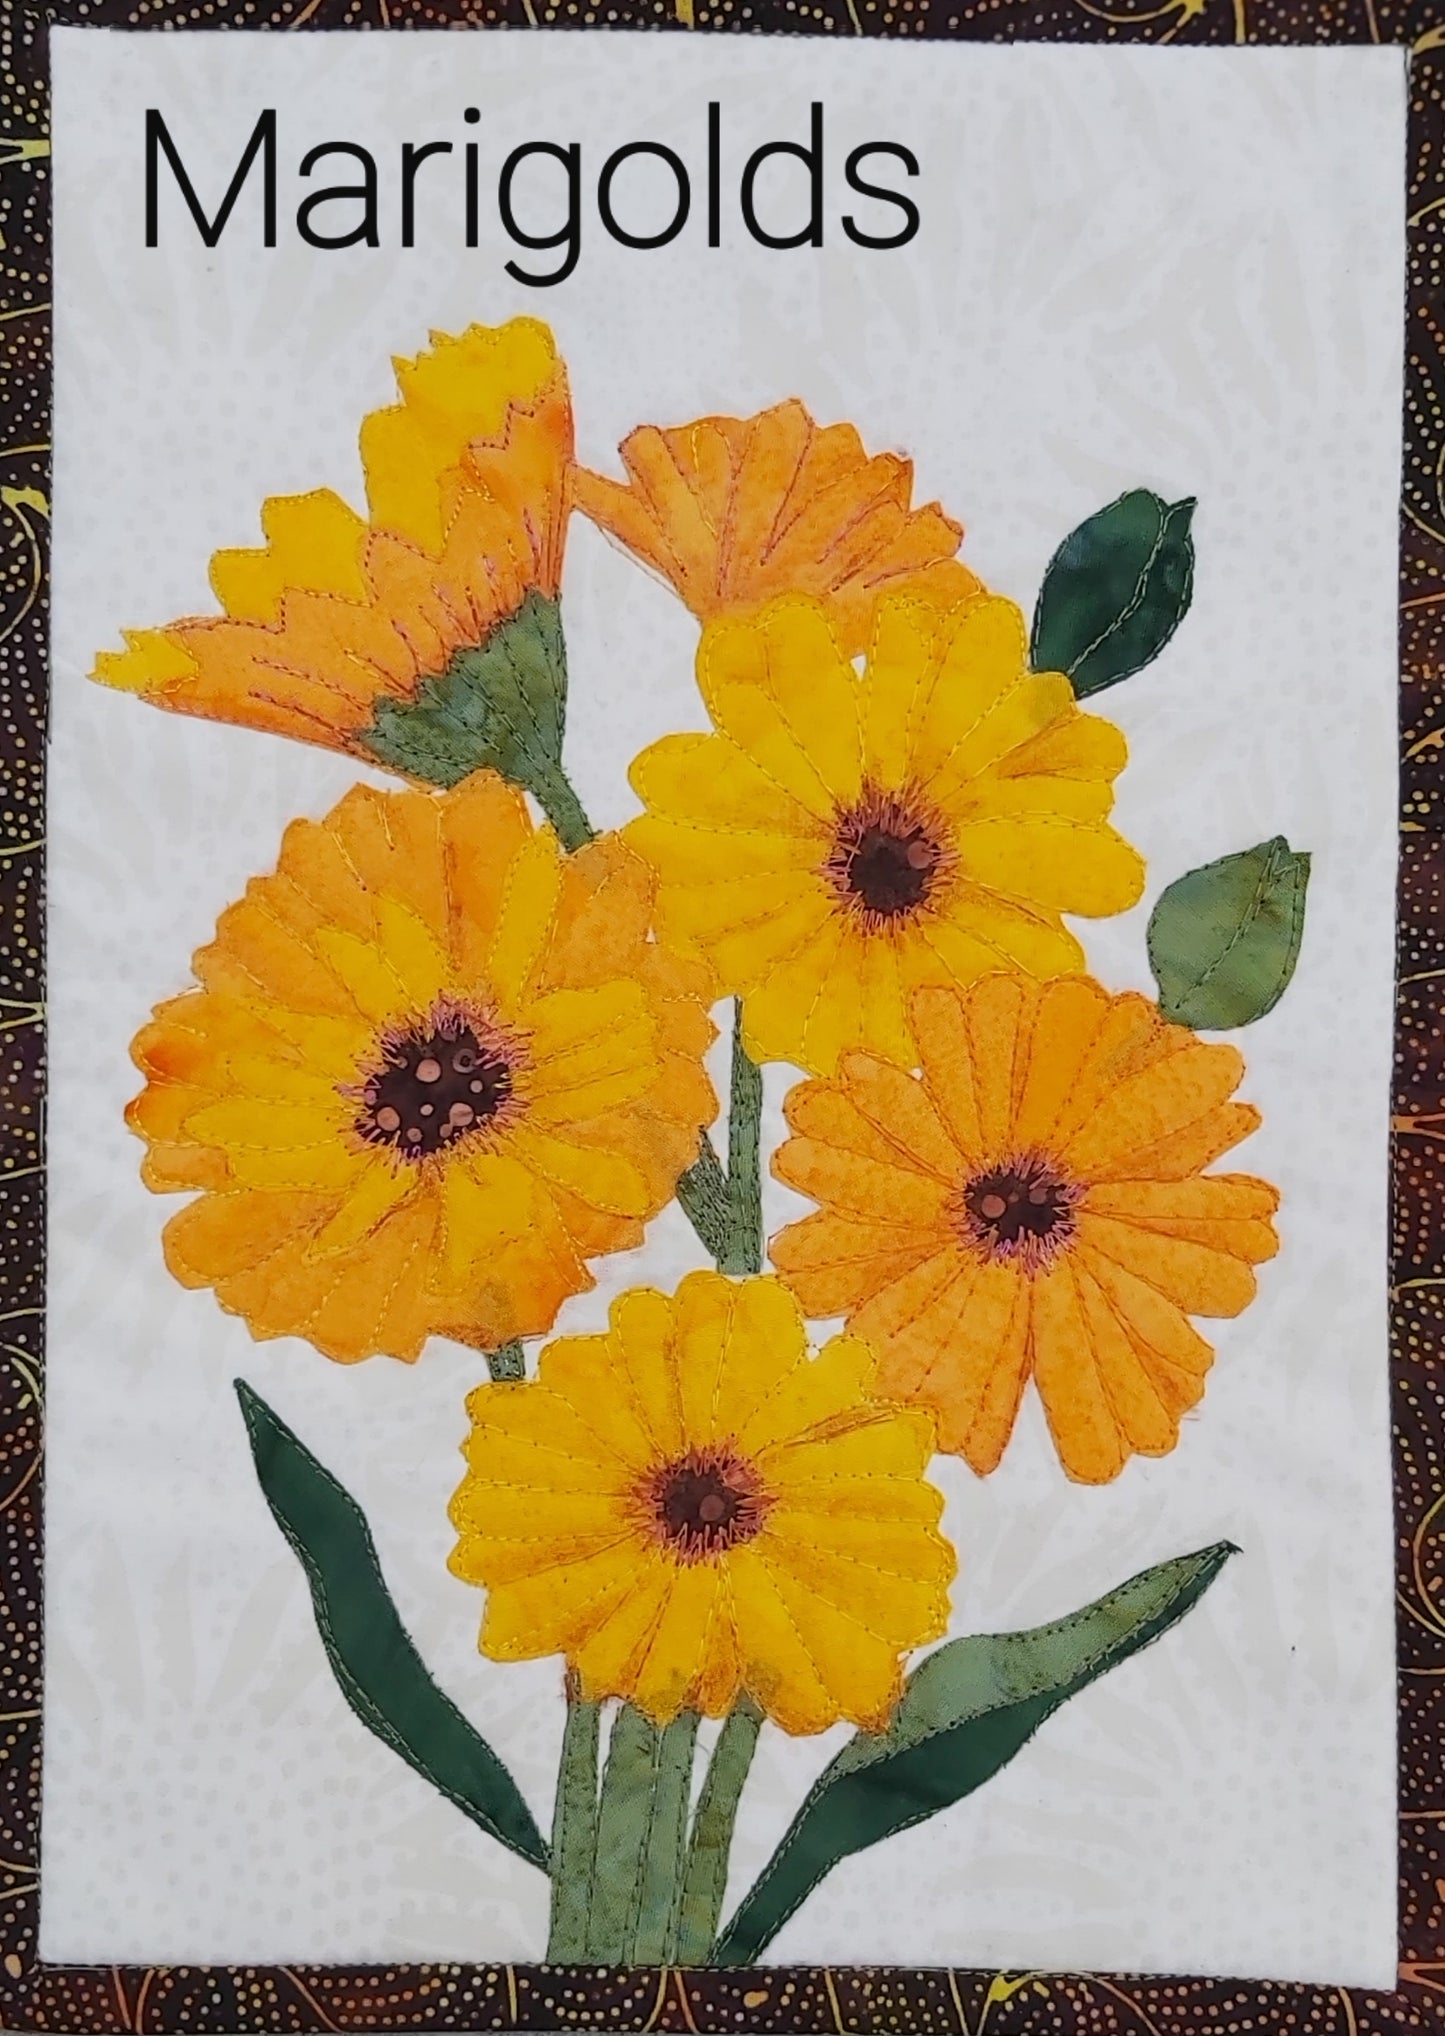 Marigolds Journal Quilt Kit or Pattern